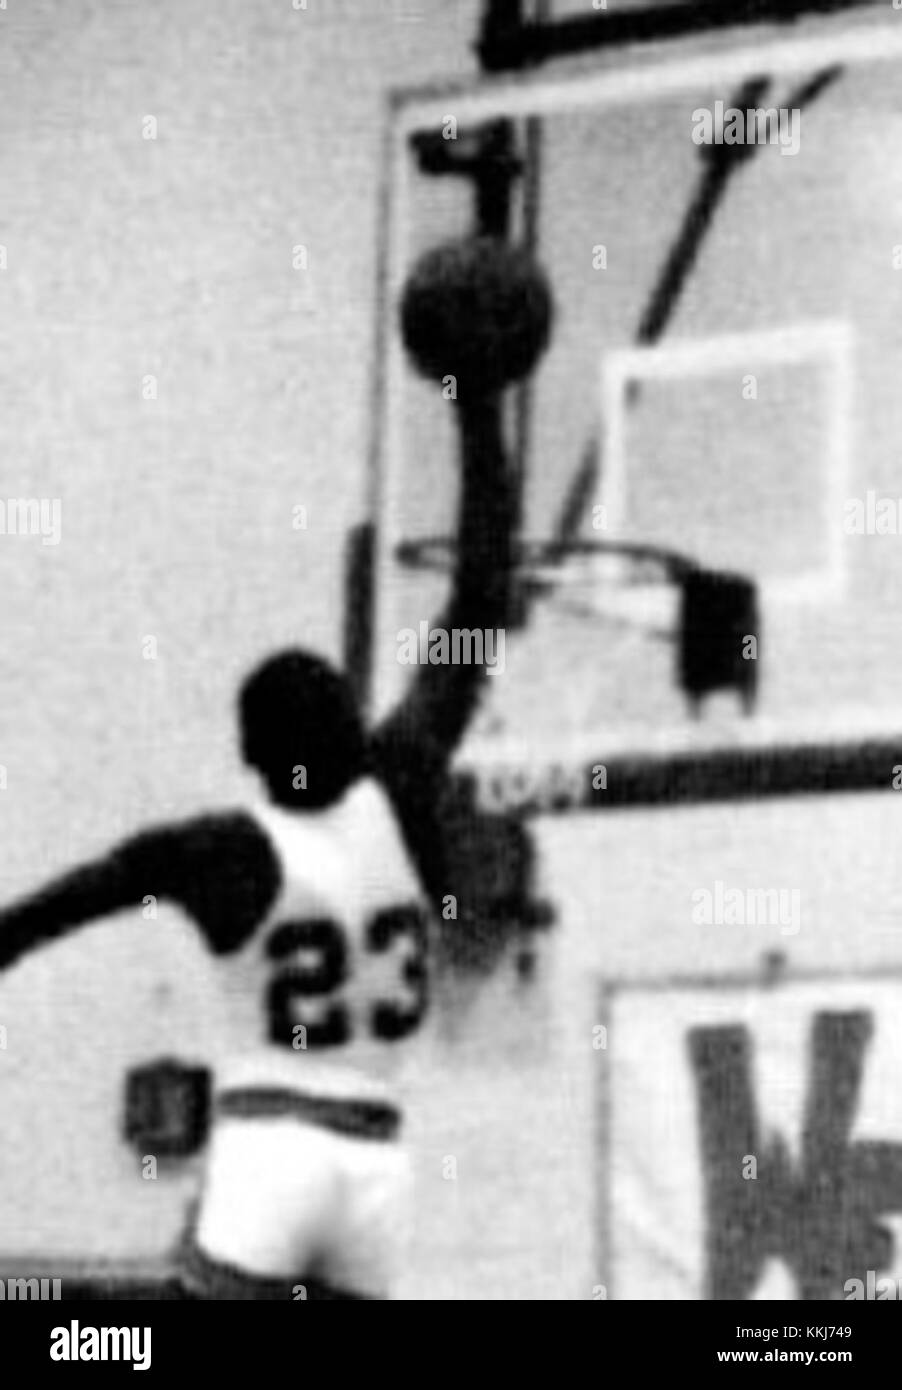 Michael Jordan High School Black and White Stock Photos & Images - Alamy